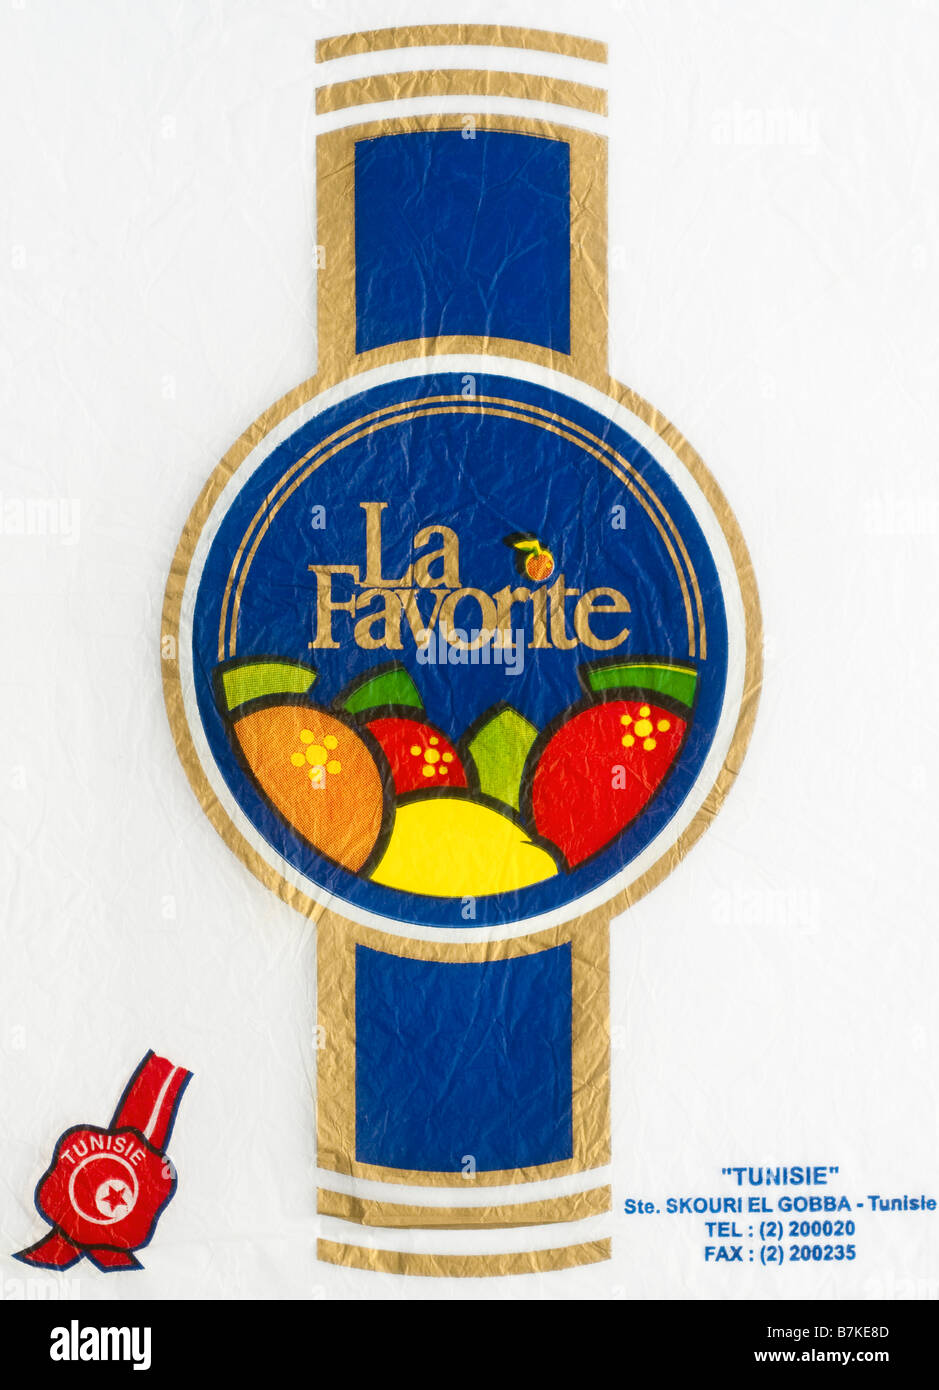 Printed ephemera / Citrus fruit wrapper from Tunisia - La Favorite illustration on tissue paper. Stock Photo